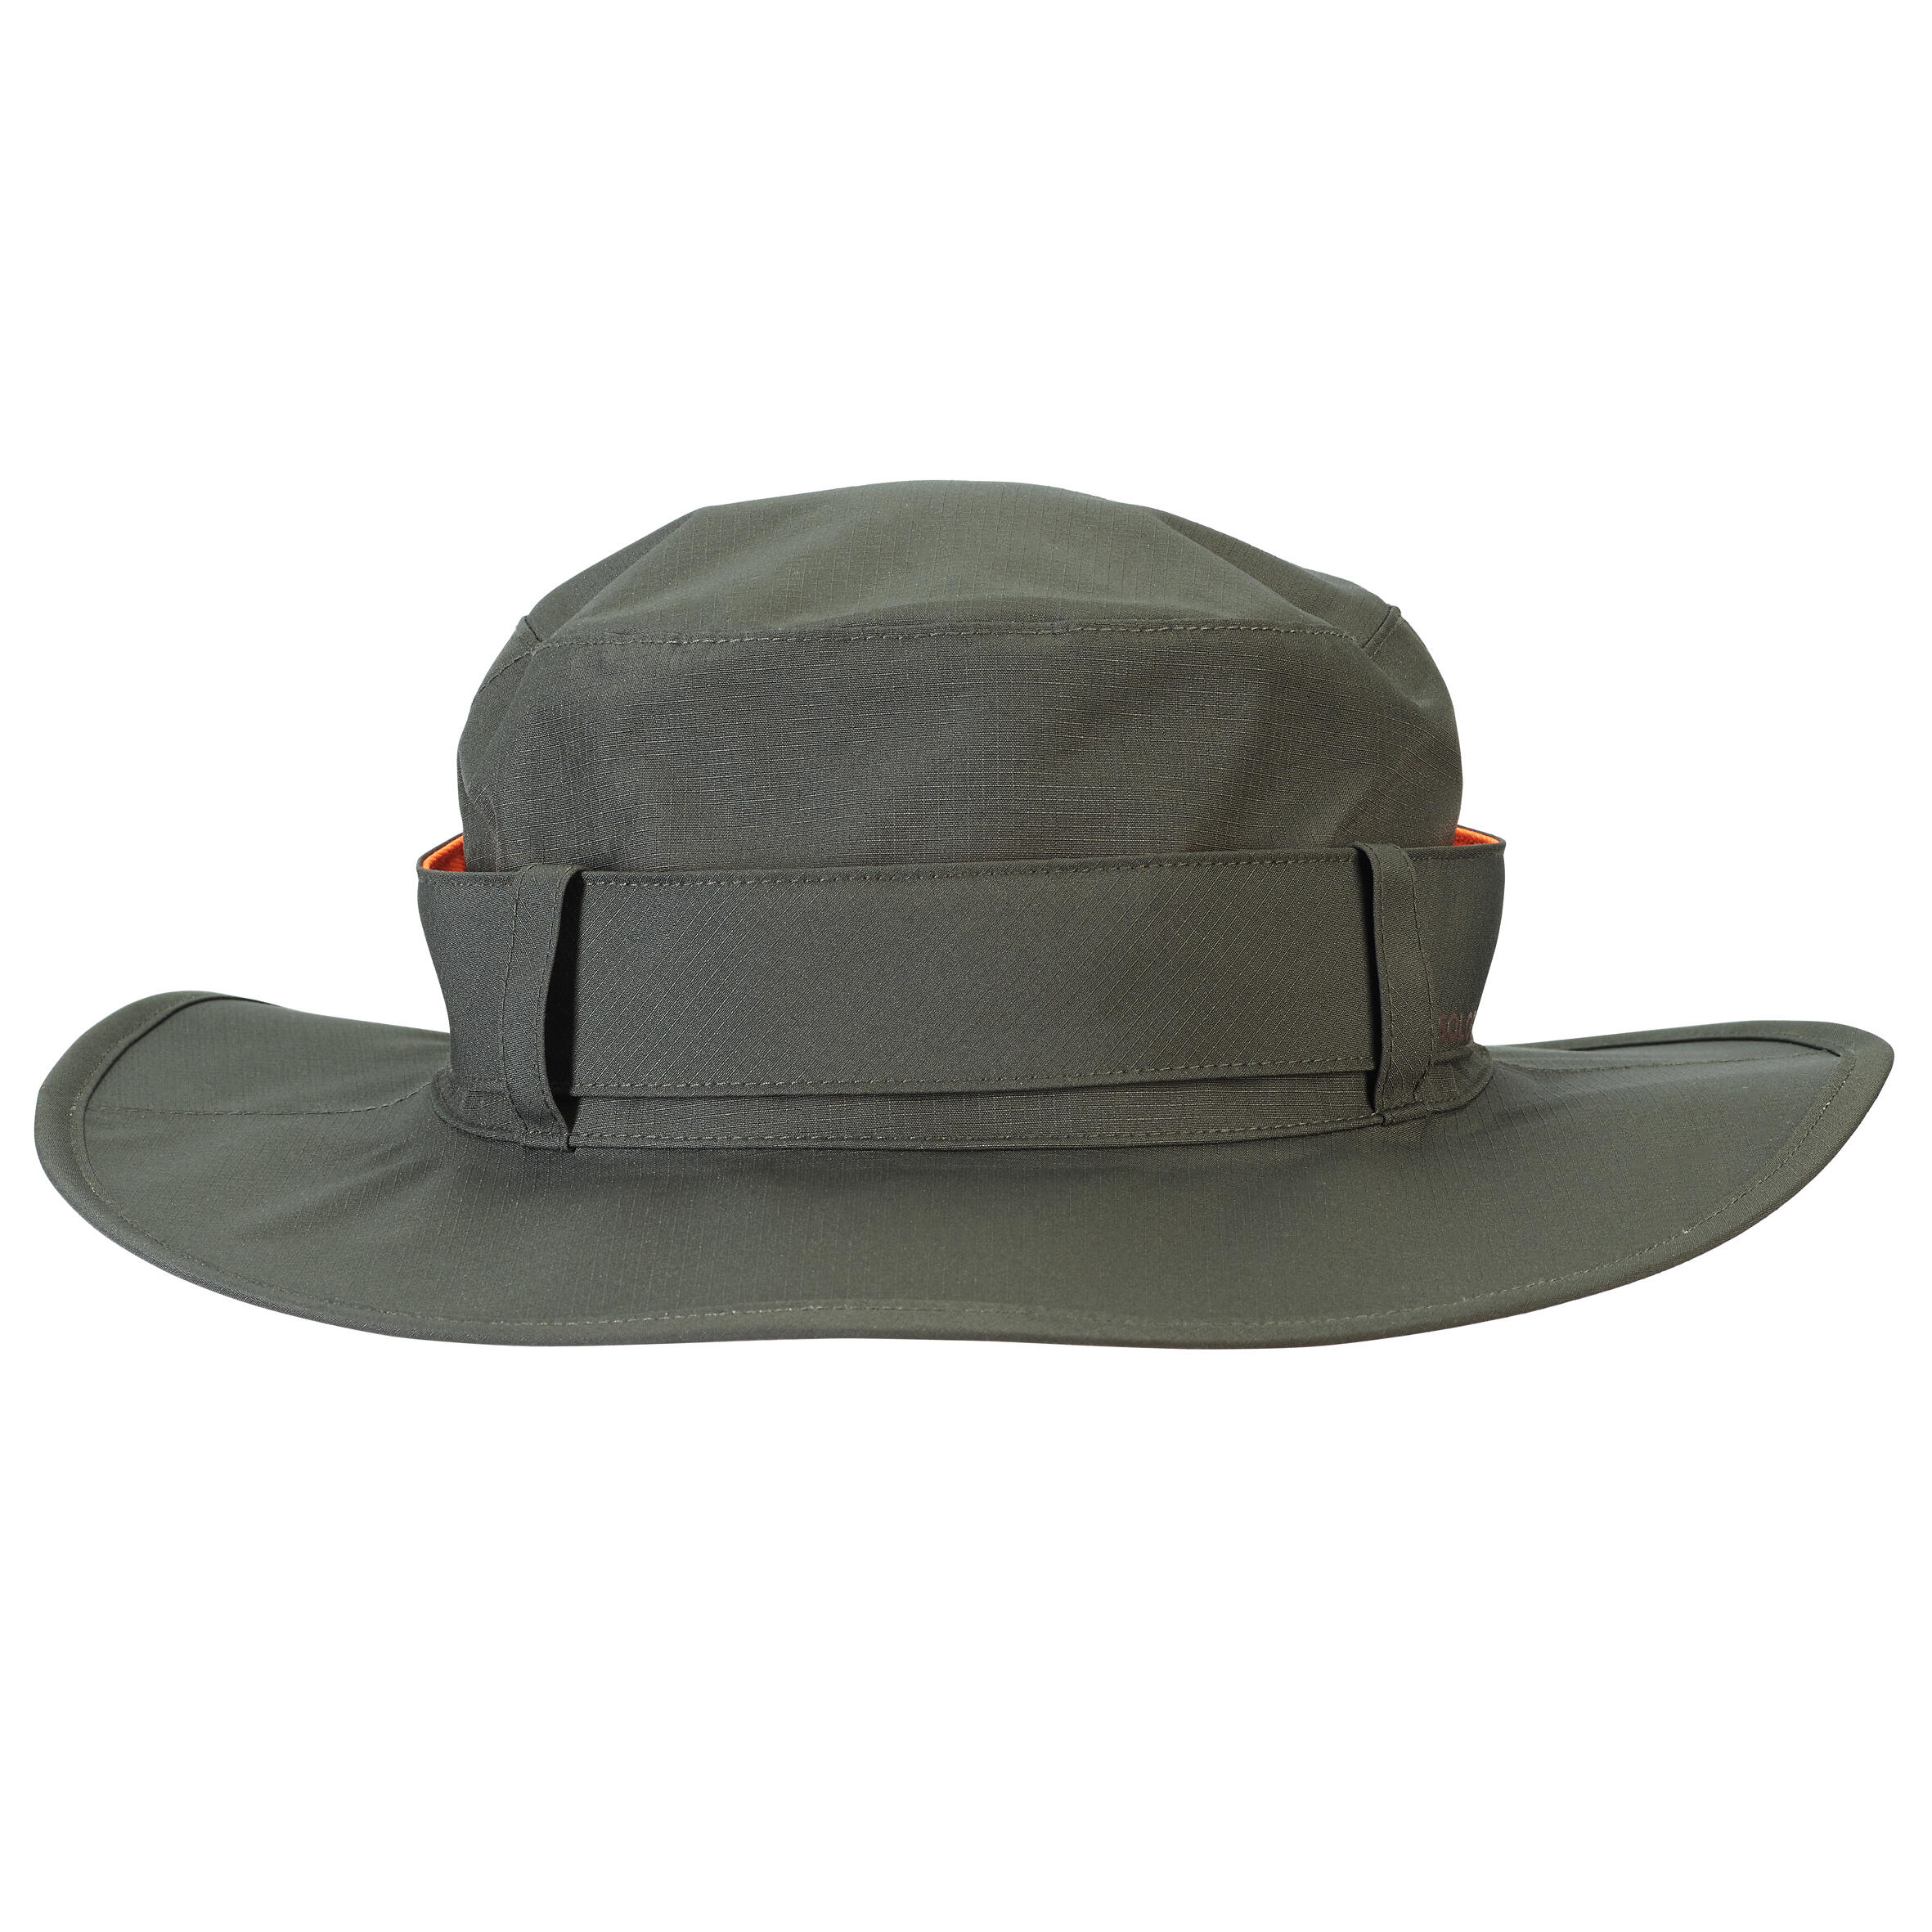 Waterproof Durable Country Sport Bucket Hat 520 - Green 4/9